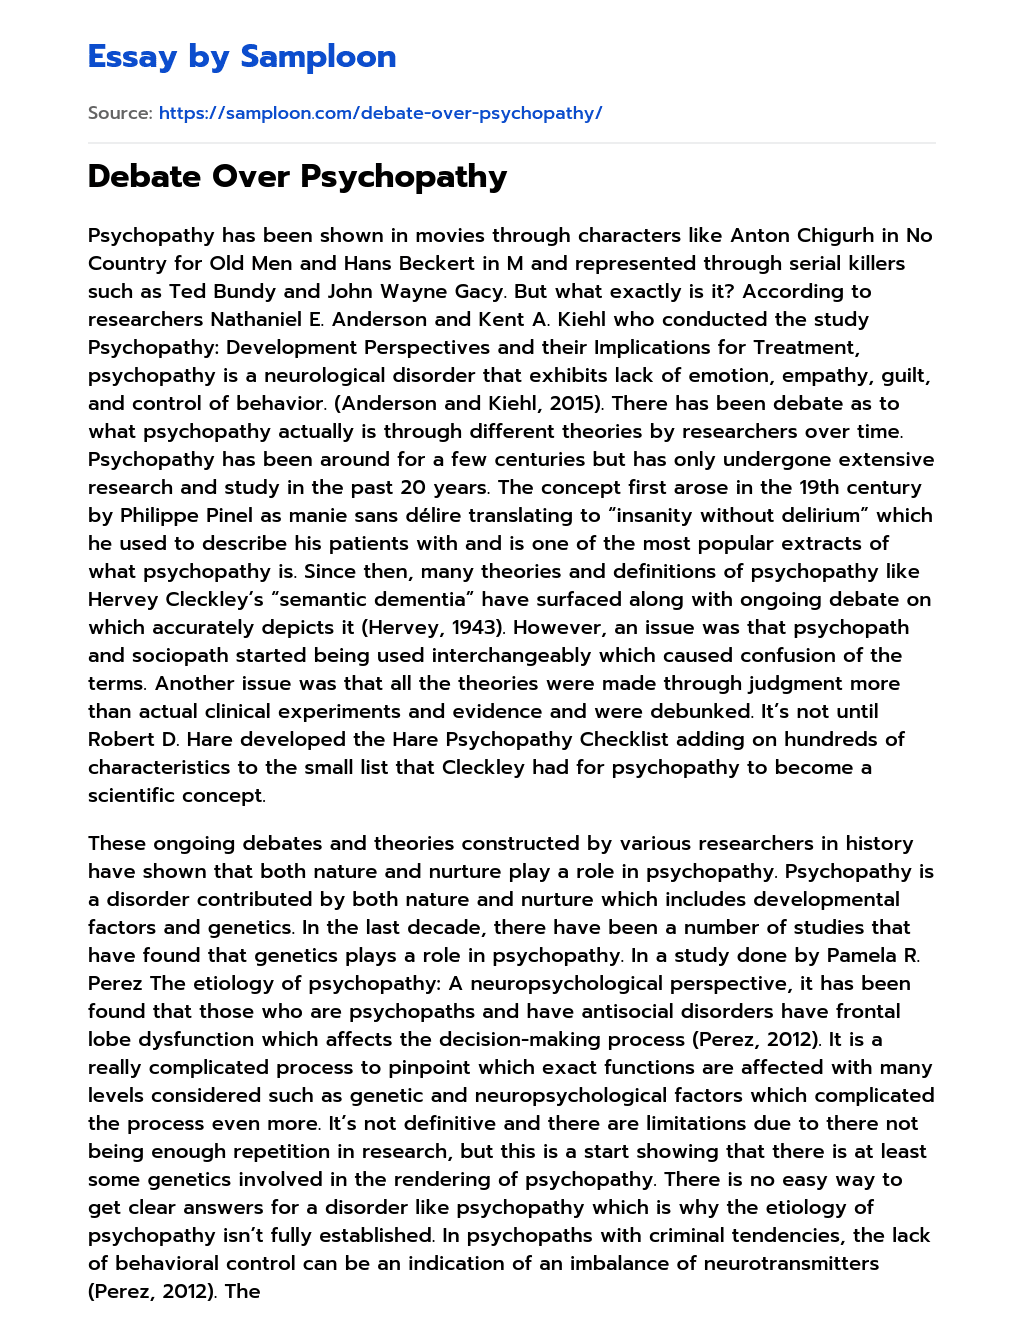 Debate Over Psychopathy essay